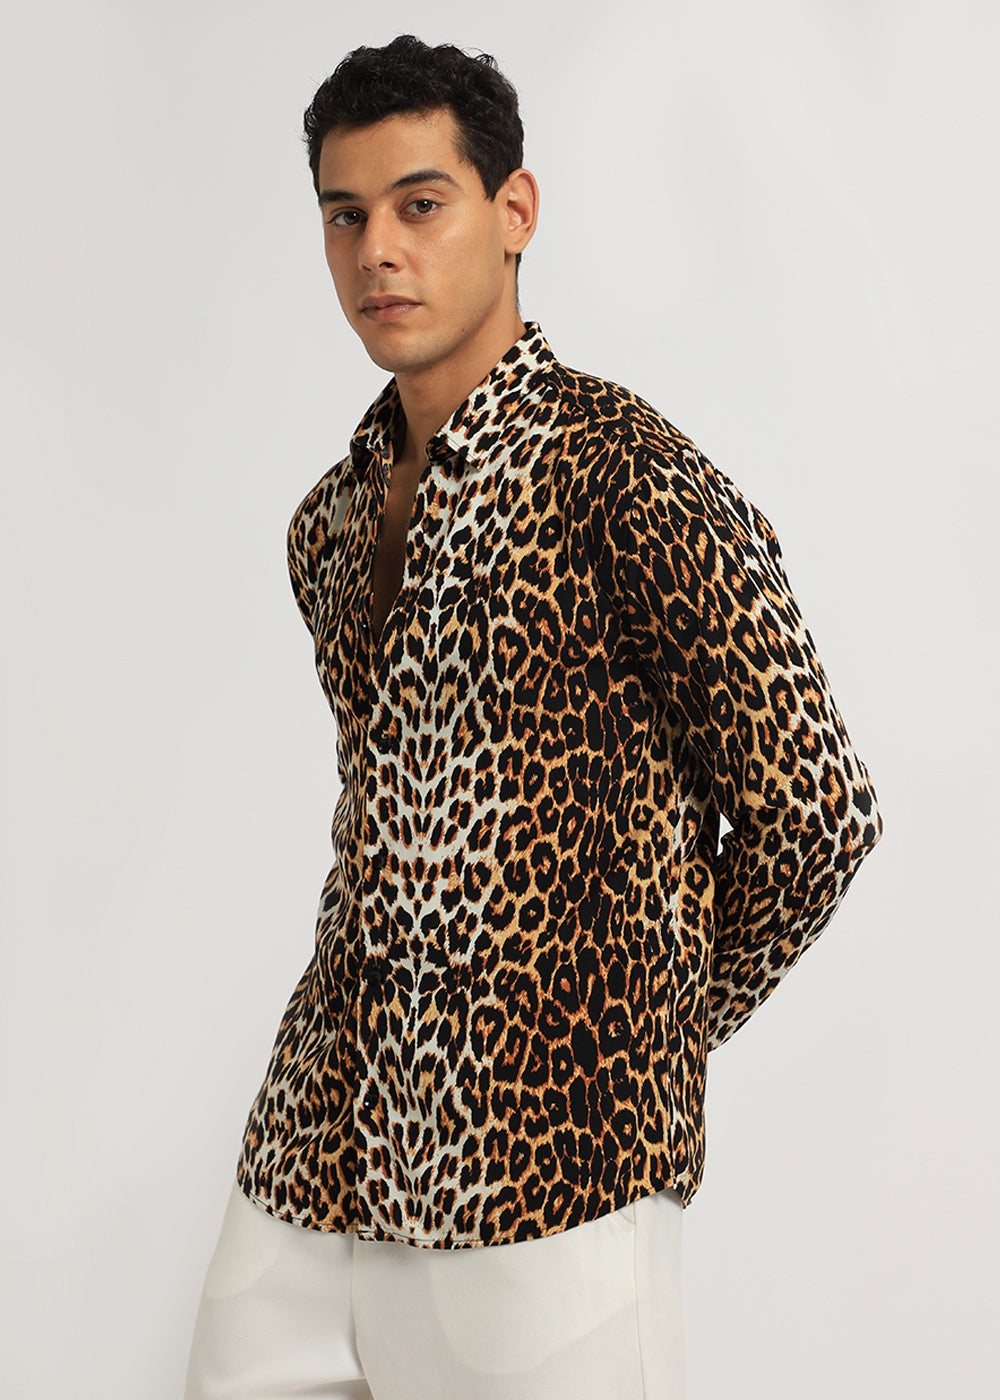 Leopard Print Full sleeve shirt